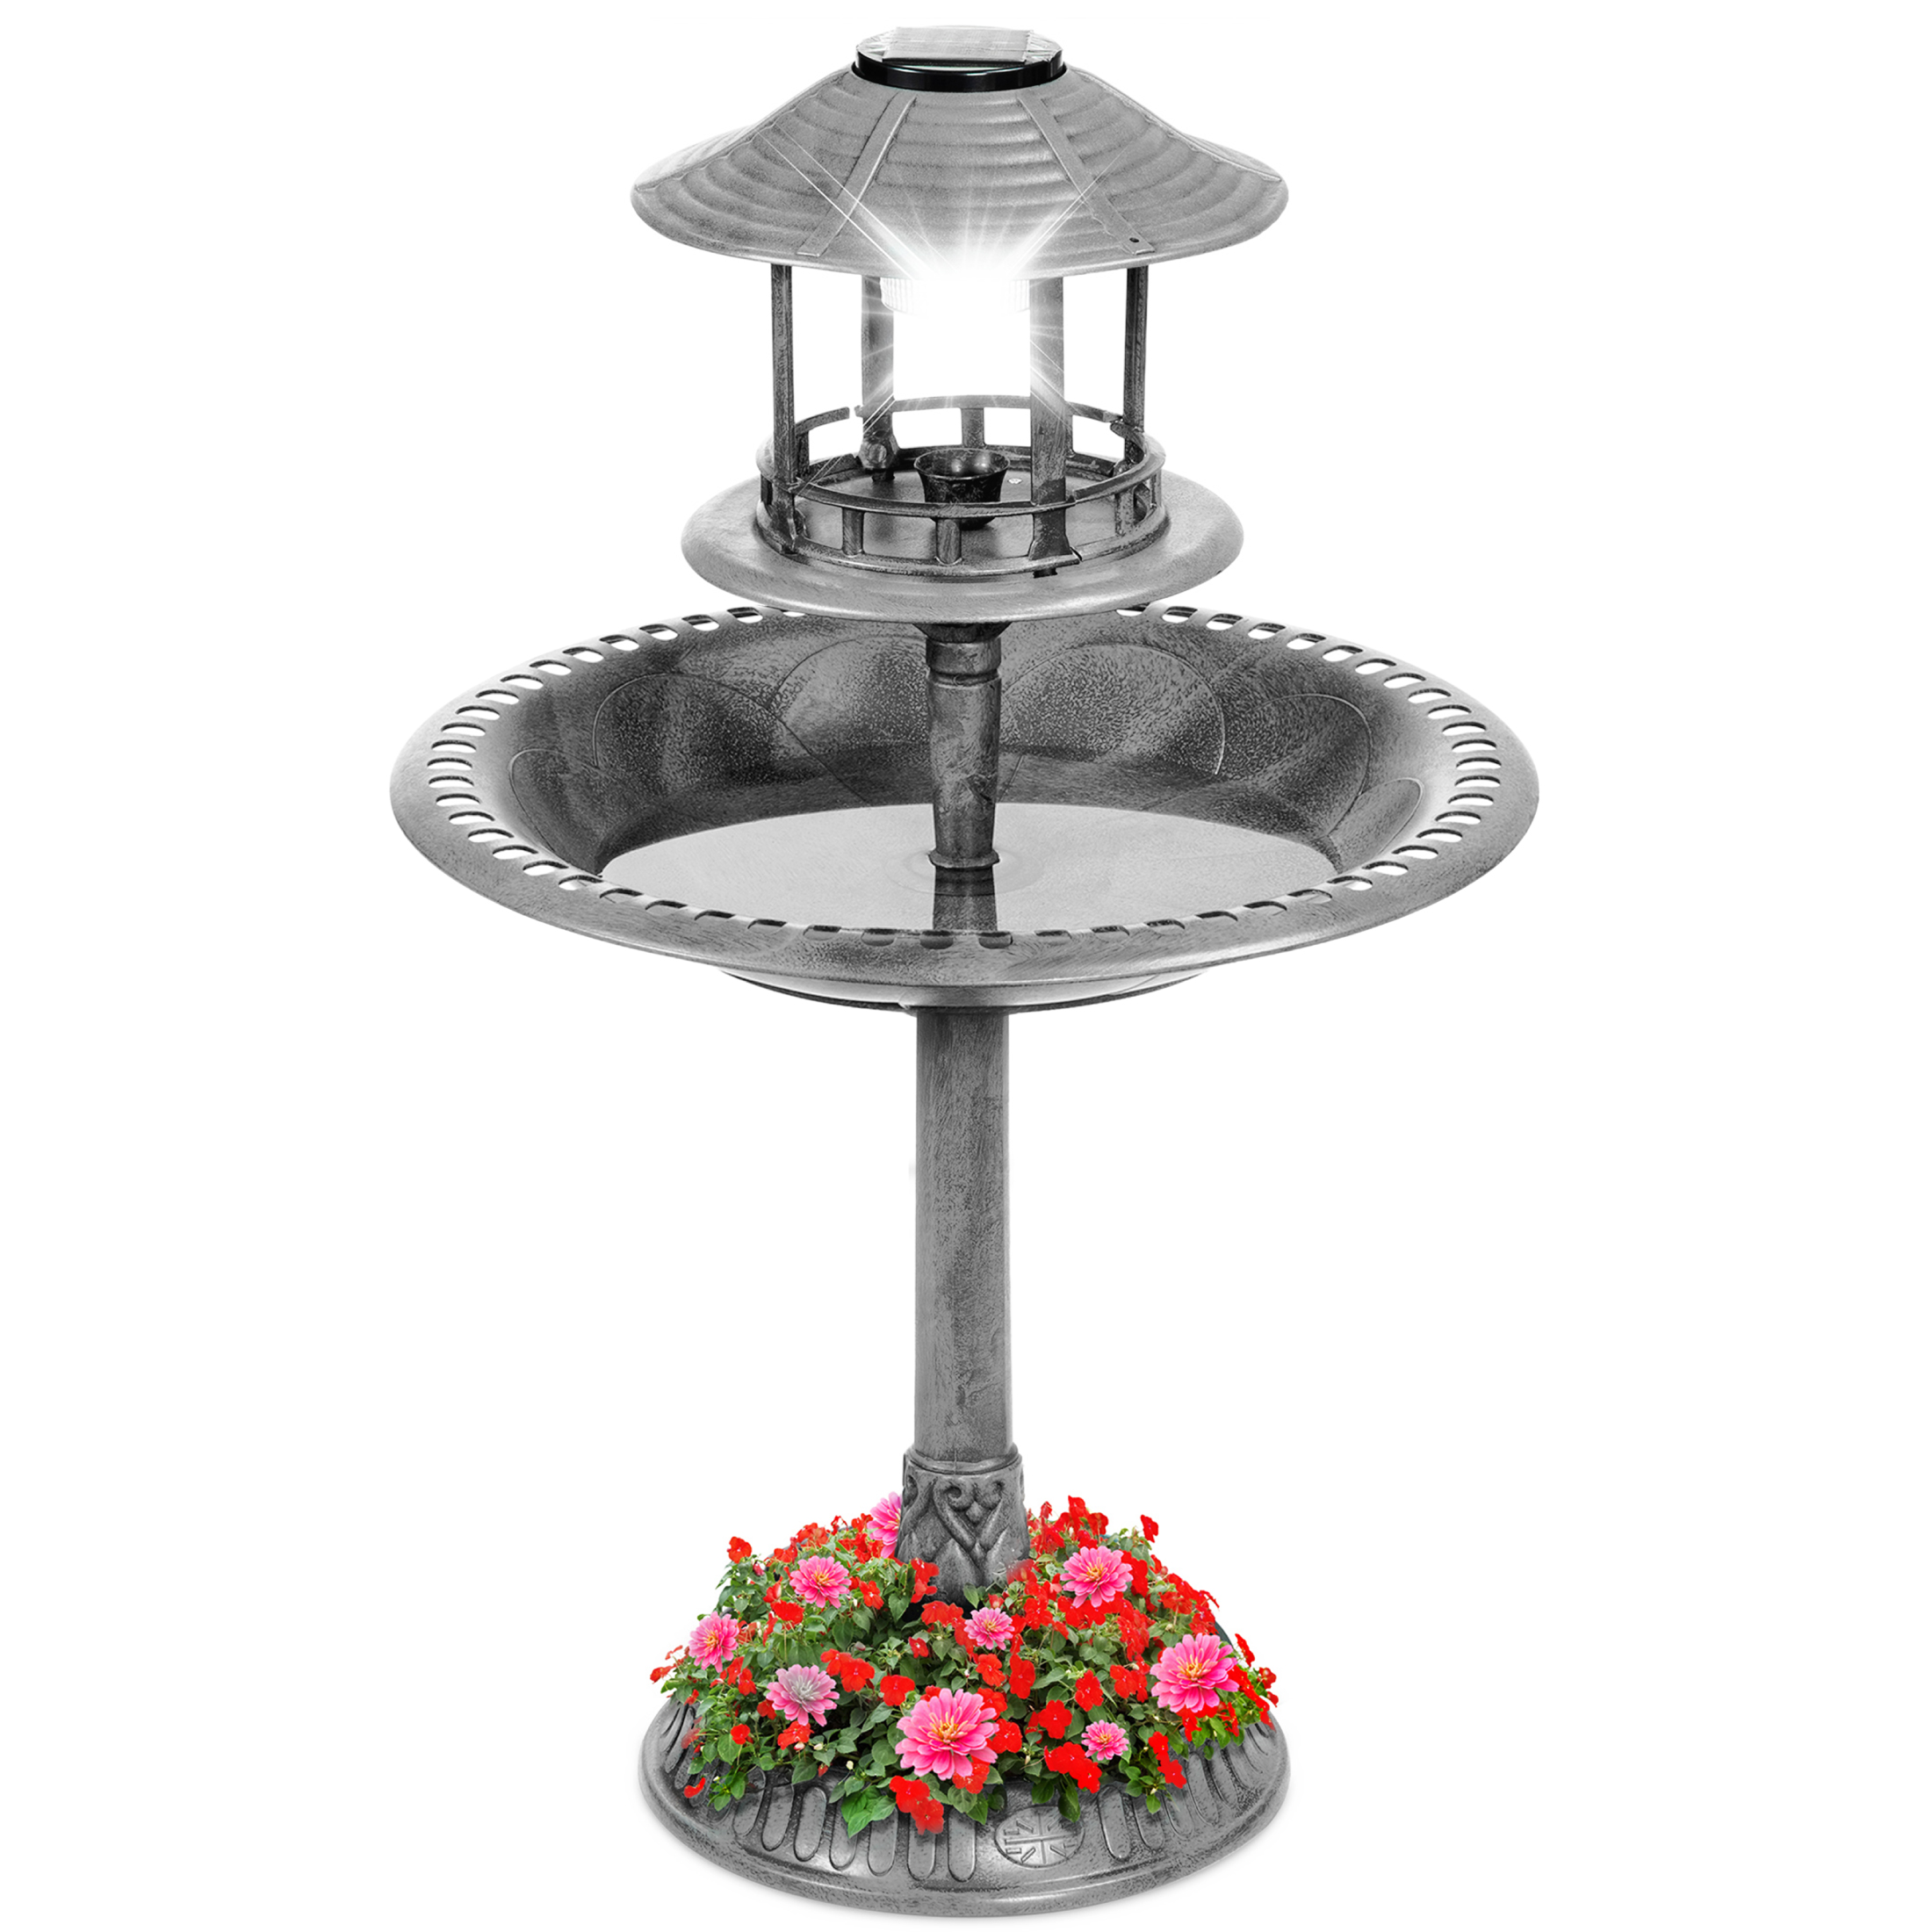 Best Choice Products Solar Outdoor Bird Bath Pedestal Fountain Garden Decoration w/ Fillable Planter Base - Stone - image 1 of 8